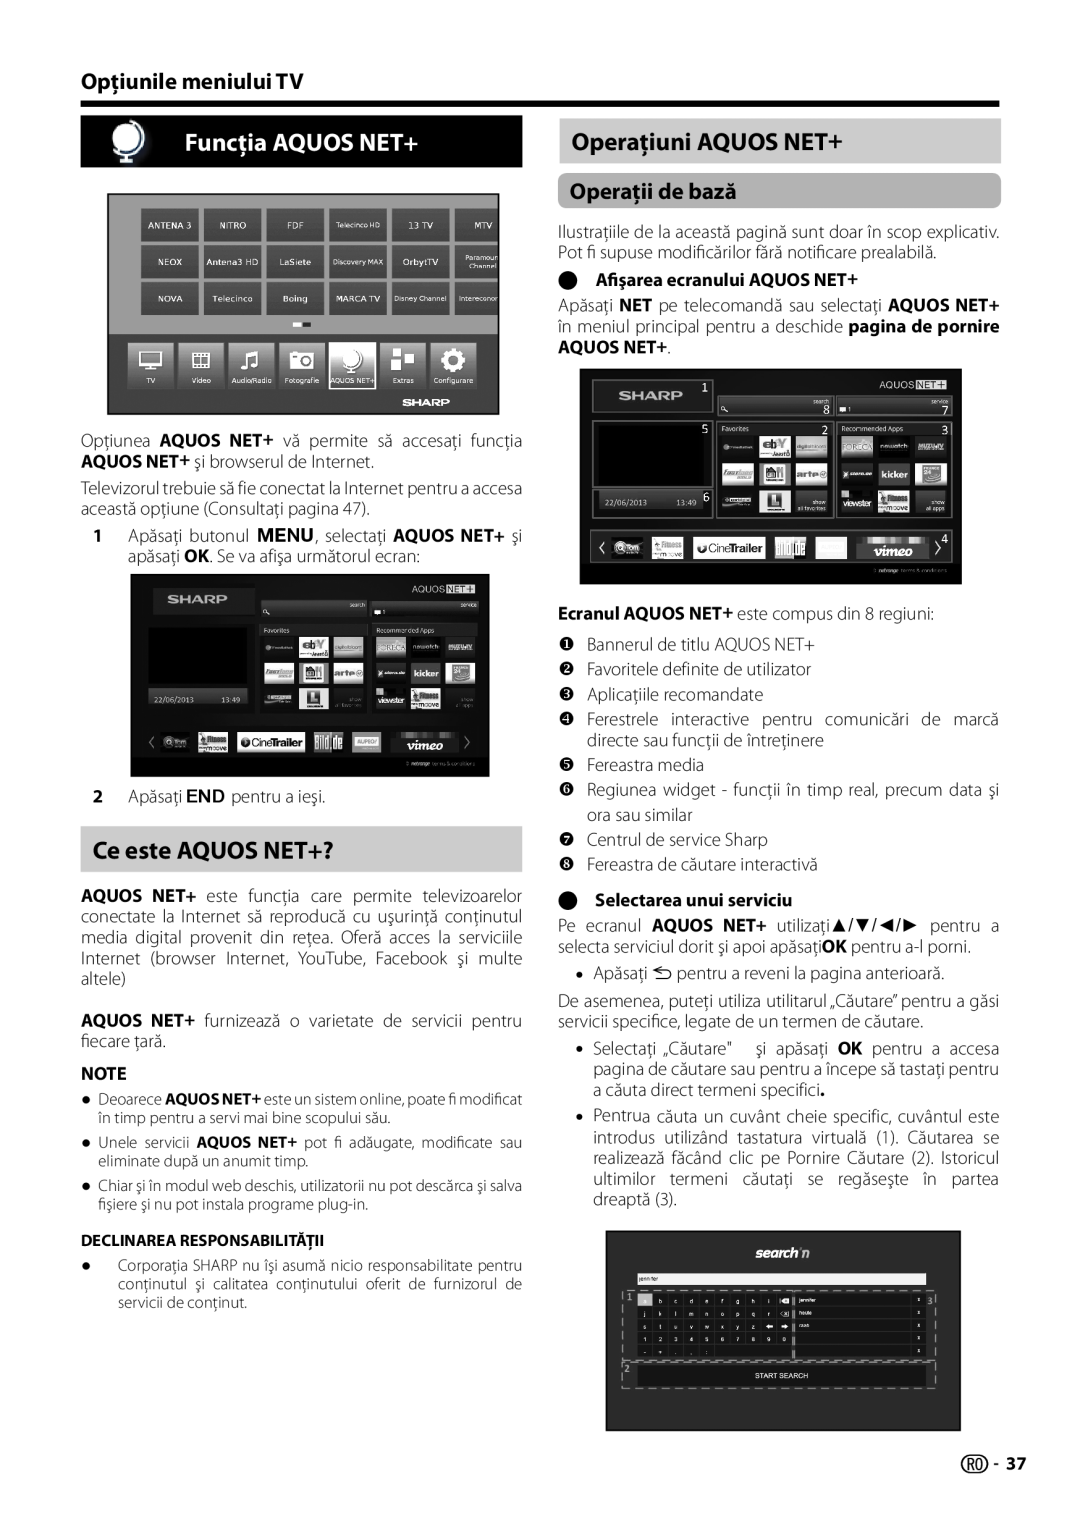 Sharp LC-39LE754E/V, LC-70LE754E Funcţia AQUOS NET+, Ce este AQUOS NET+?, Operaţiuni AQUOS NET+, Opţiunile meniului TV 